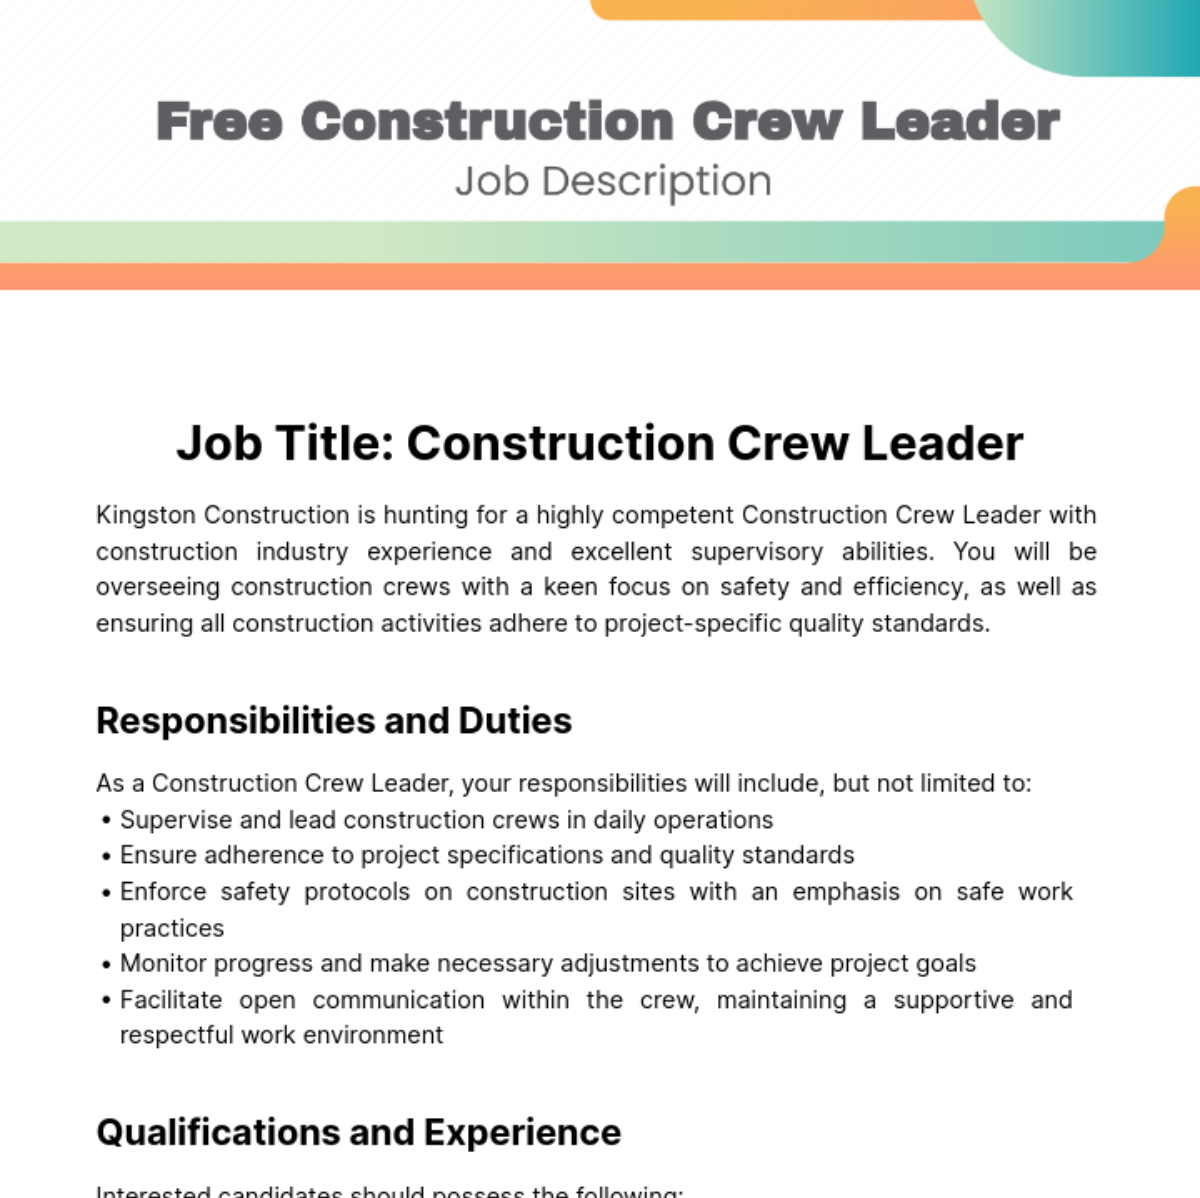 Free Construction Crew Leader Job Description Template